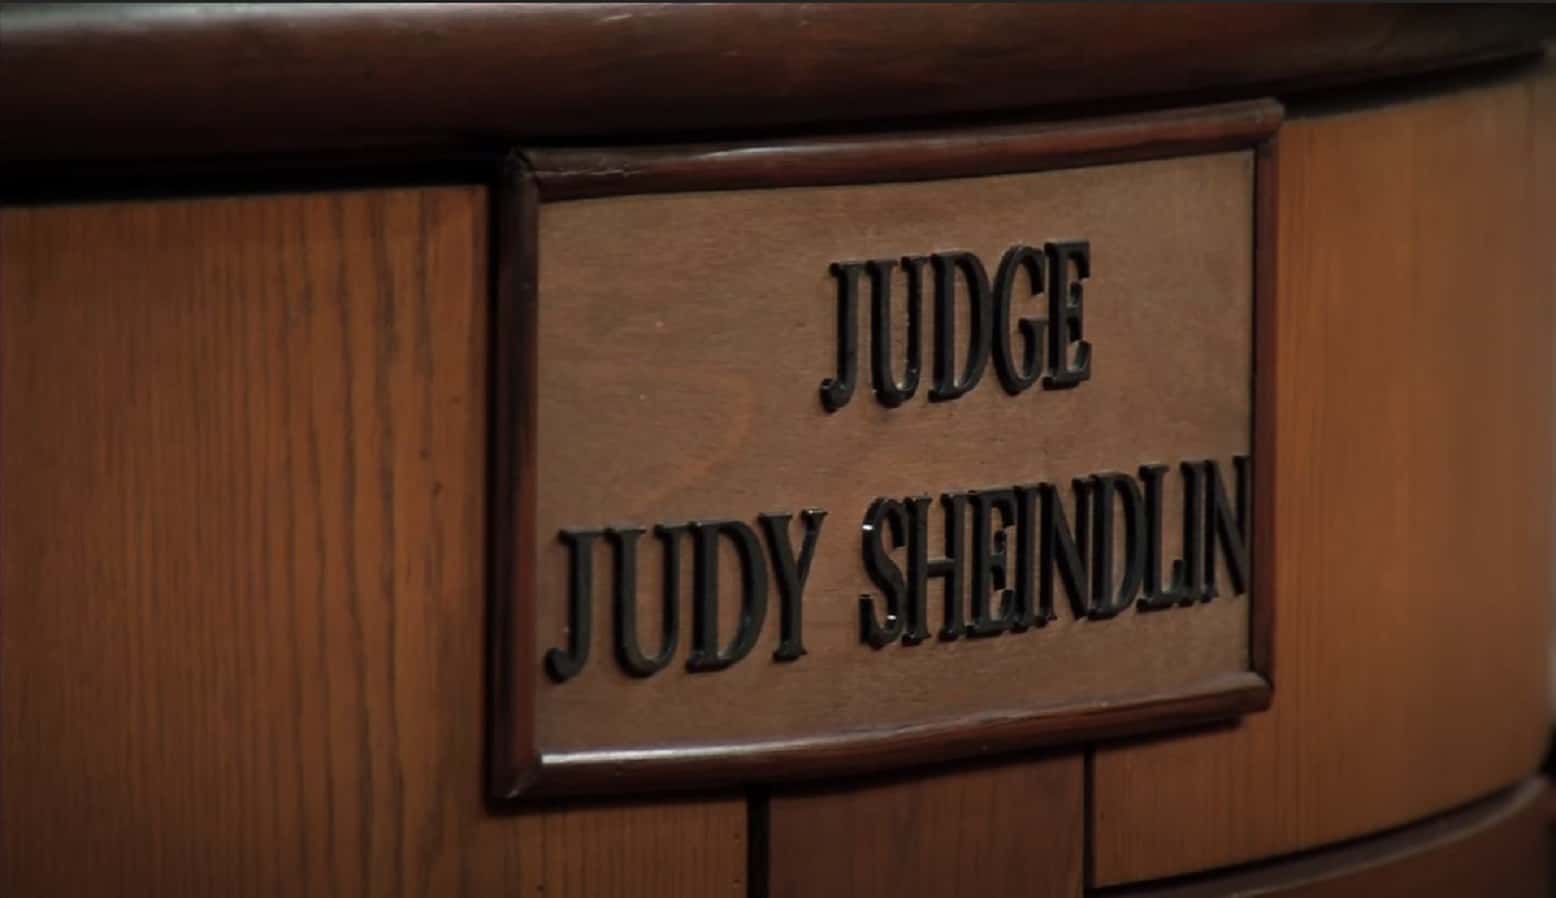 Judge Judy facts